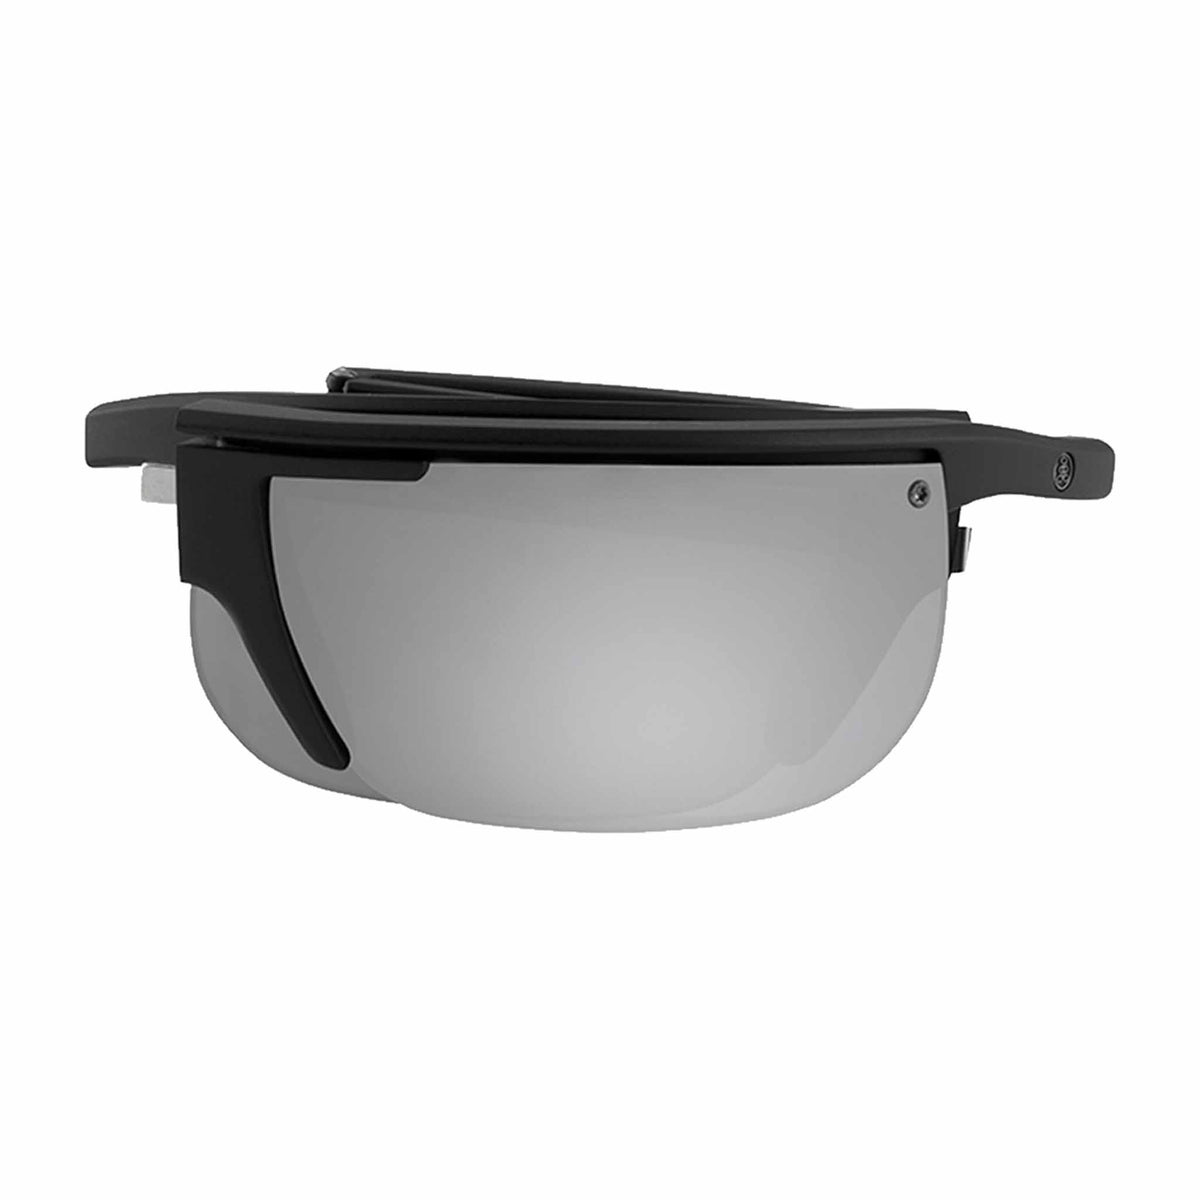 Popticals, Premium Compact Sunglasses, PopArt, 010030-BMLN, Polarized Sunglasses, Matte Black Frame, Gray Lenses with Silver Mirror Finish, Compact View